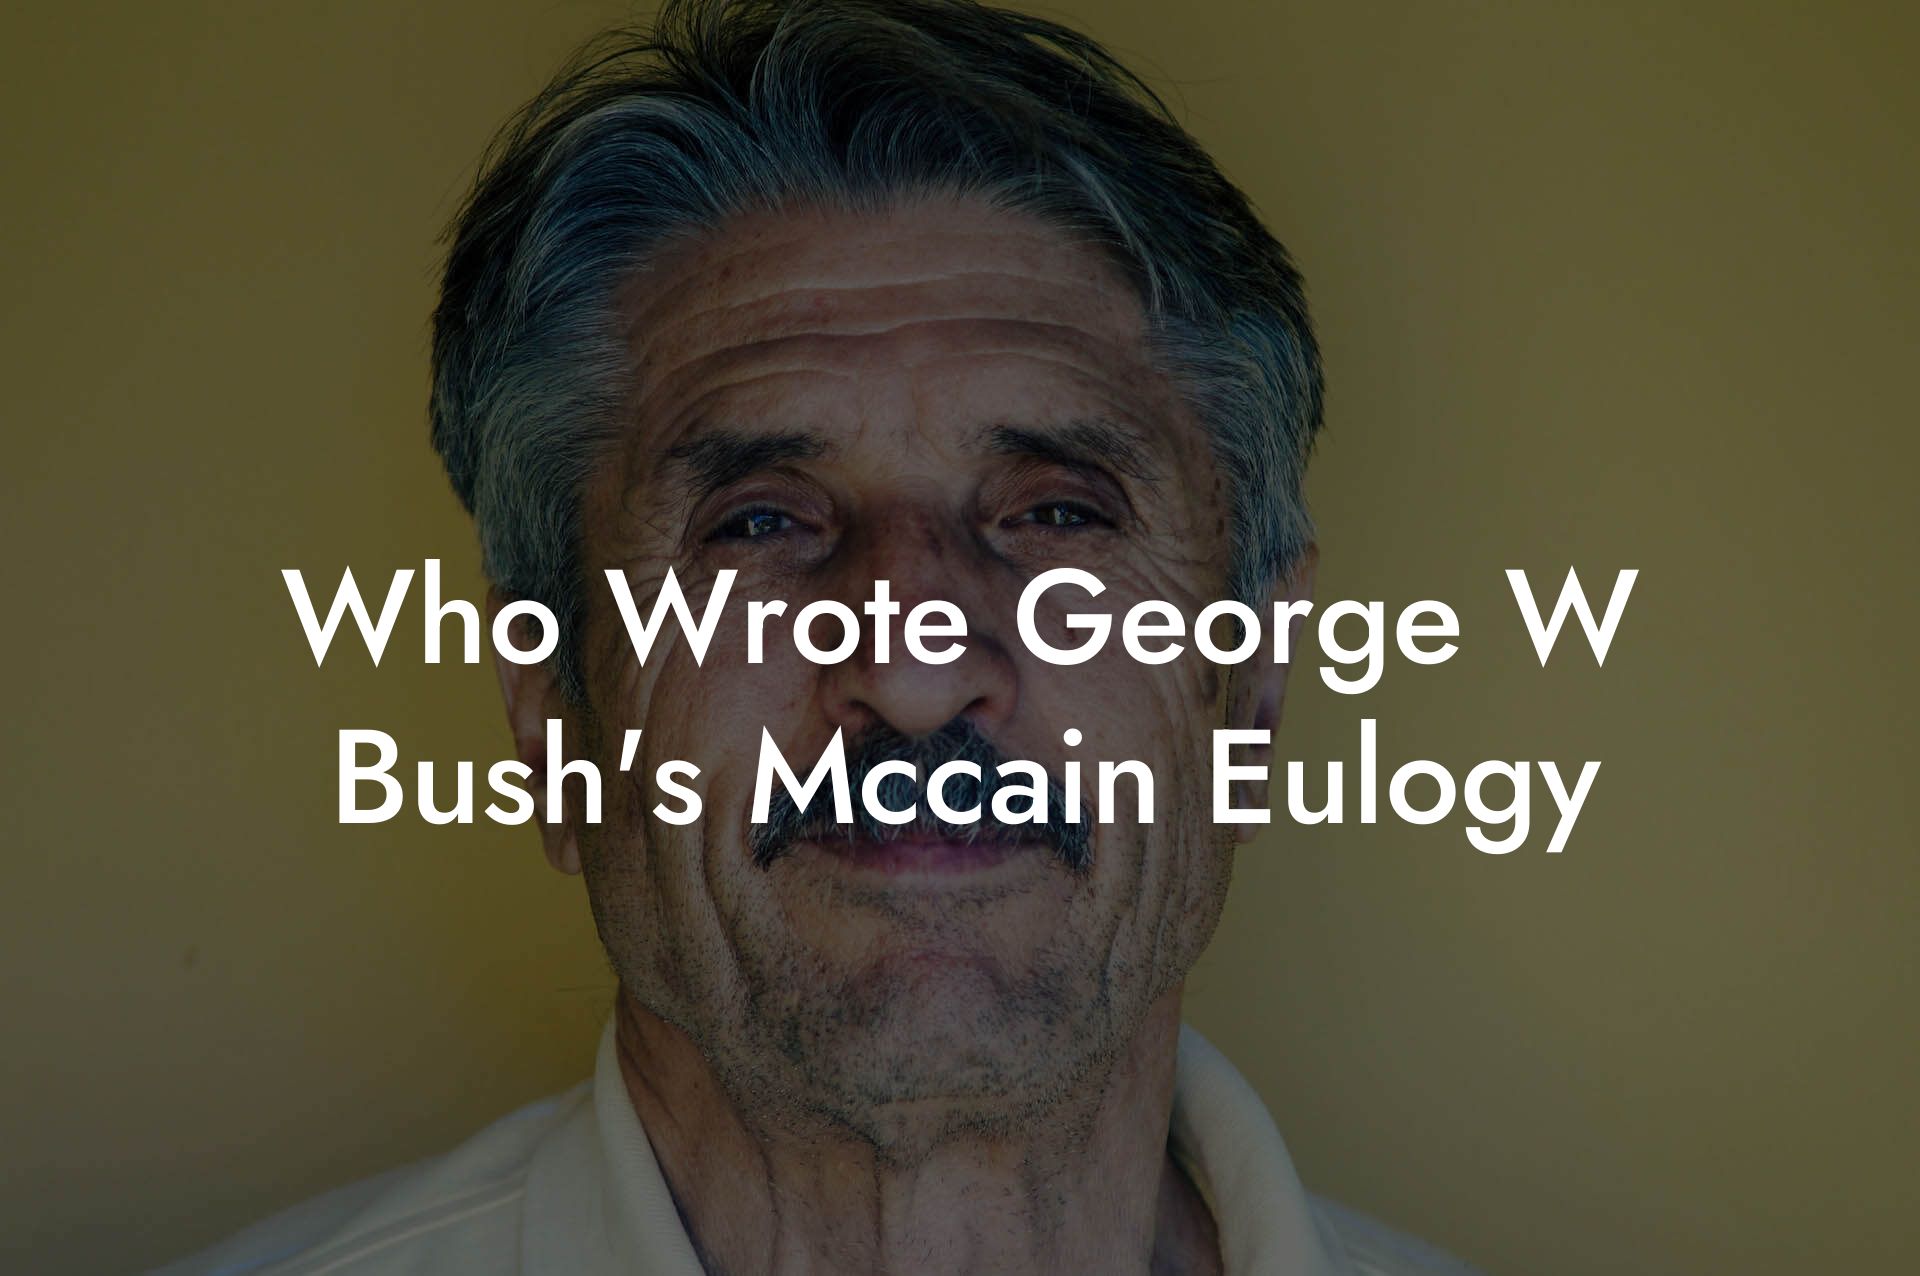 Who Wrote George W Bush's Mccain Eulogy